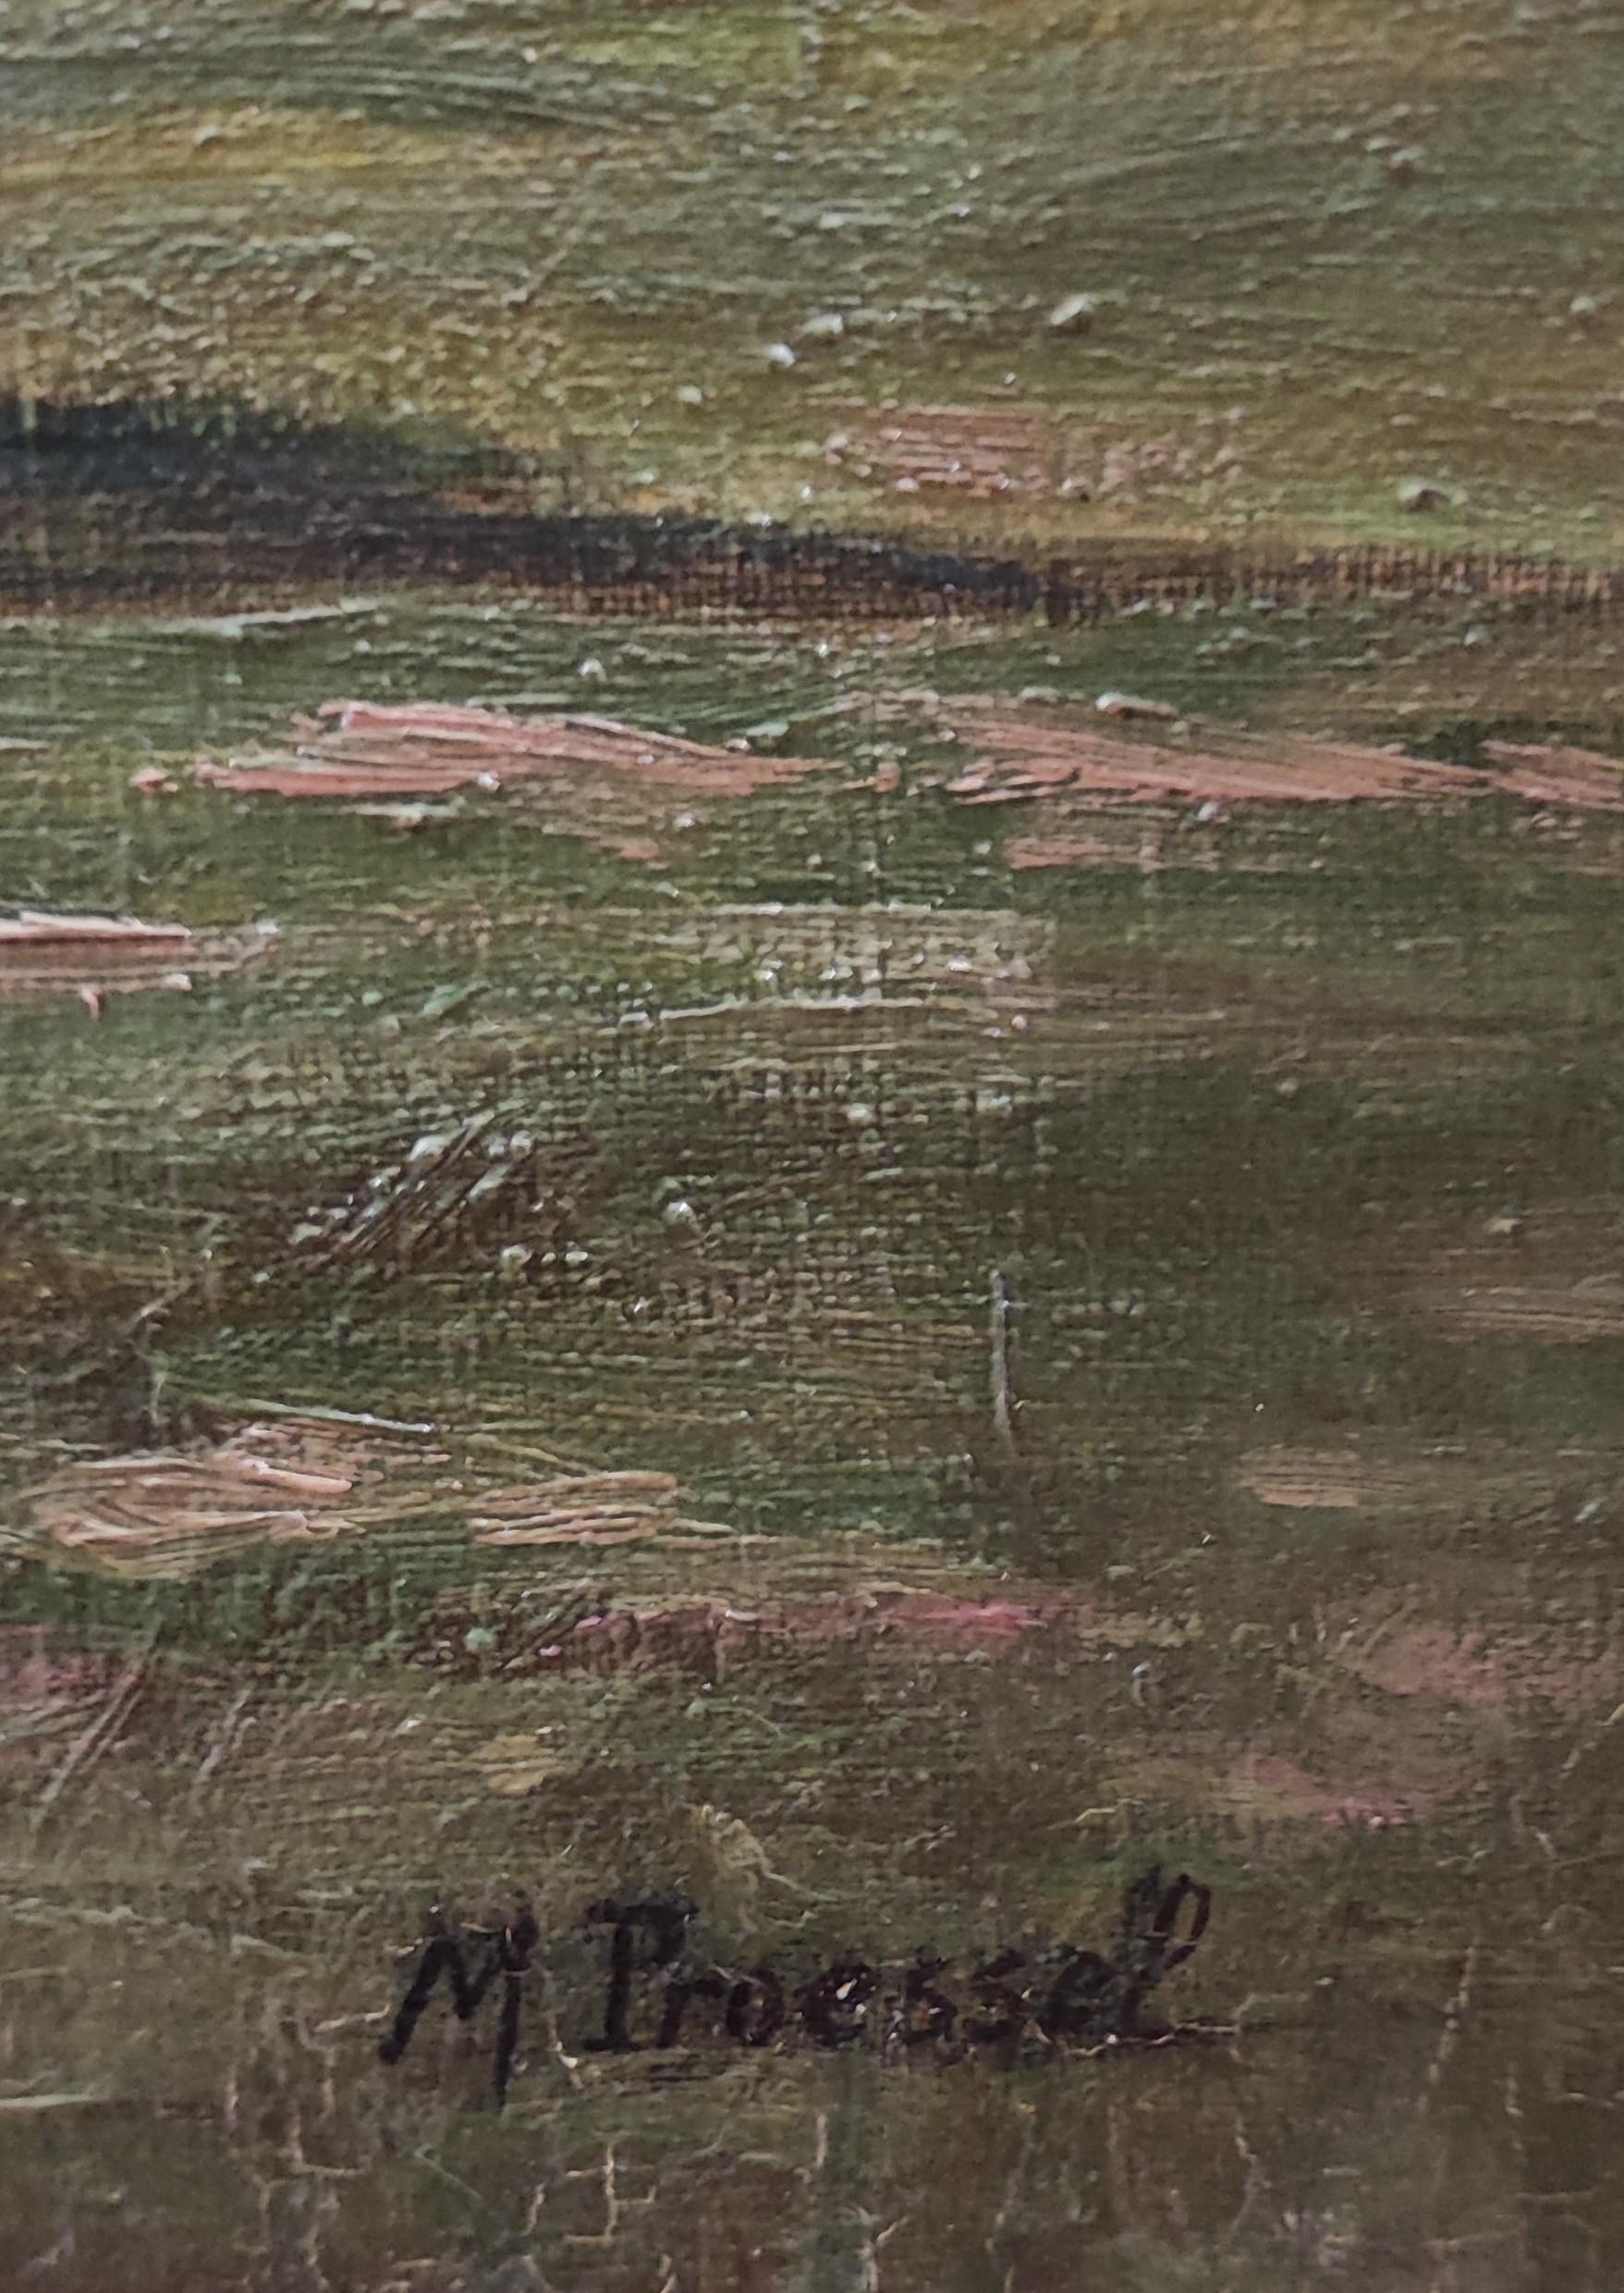 Work on canvas
Wooden frame with burgundy velvet borders
61 x 73 x 4 cm